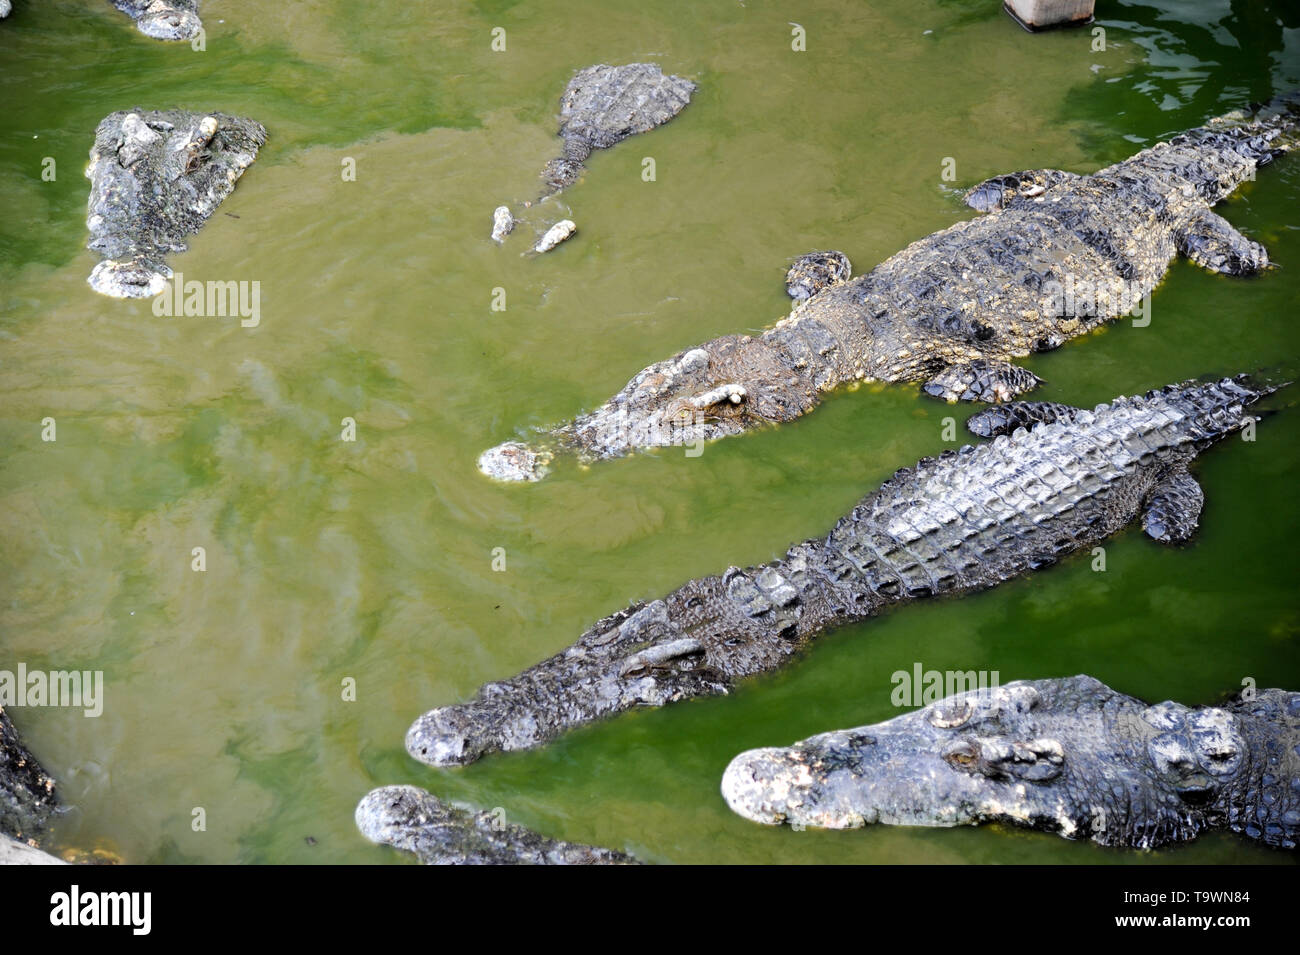 Crocodiles in muddy water Stock Photo